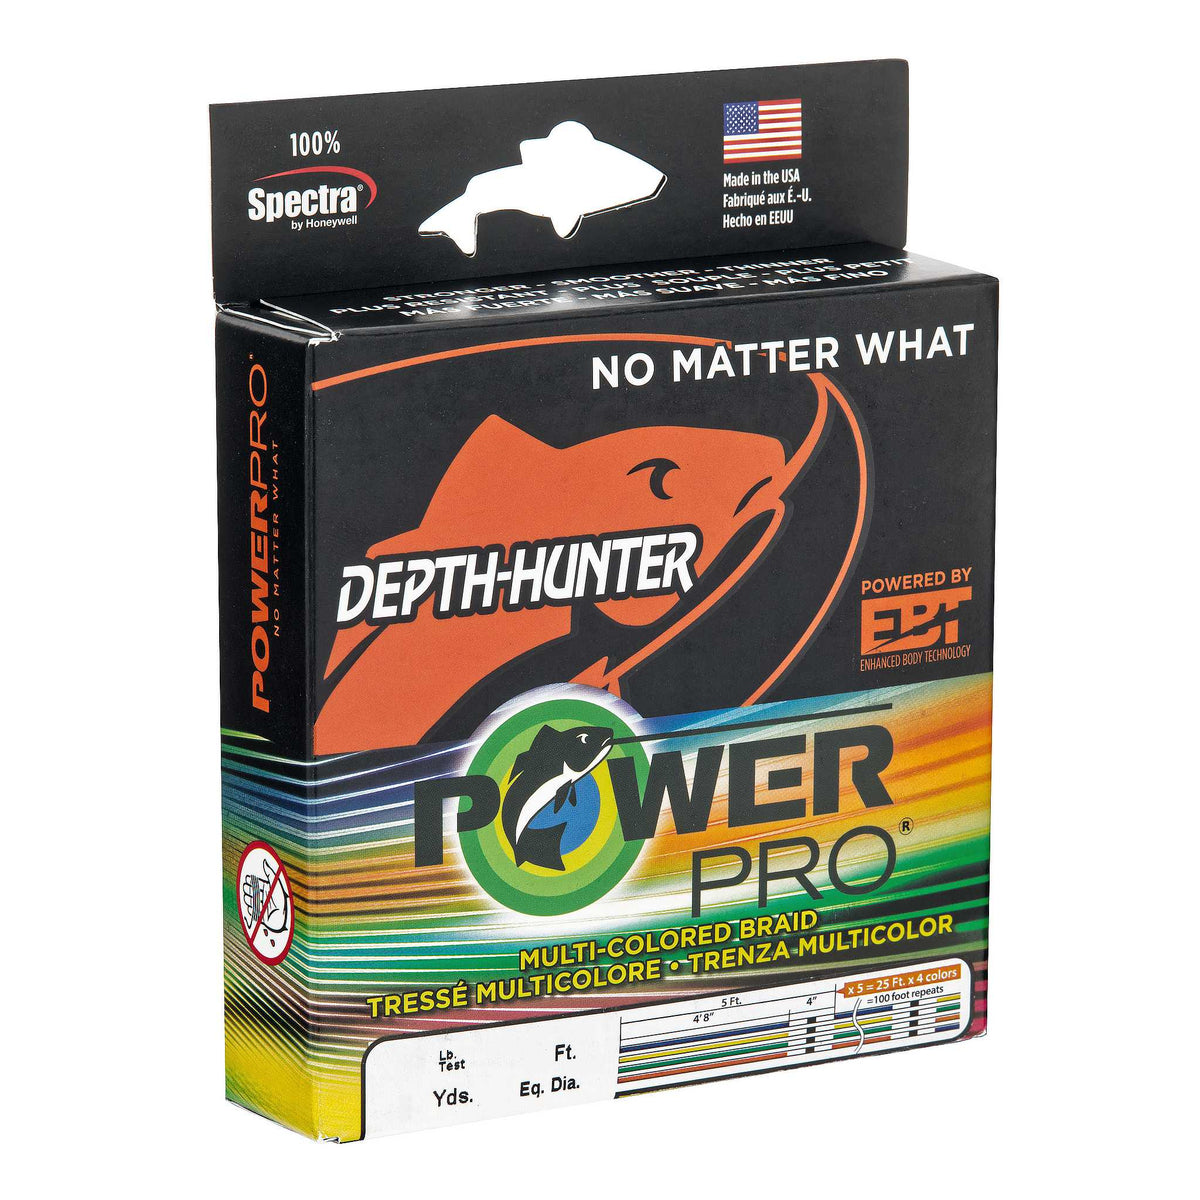 Power Pro Depth Hunter Braid. 1500 yards 80 LB. - The Hull Truth